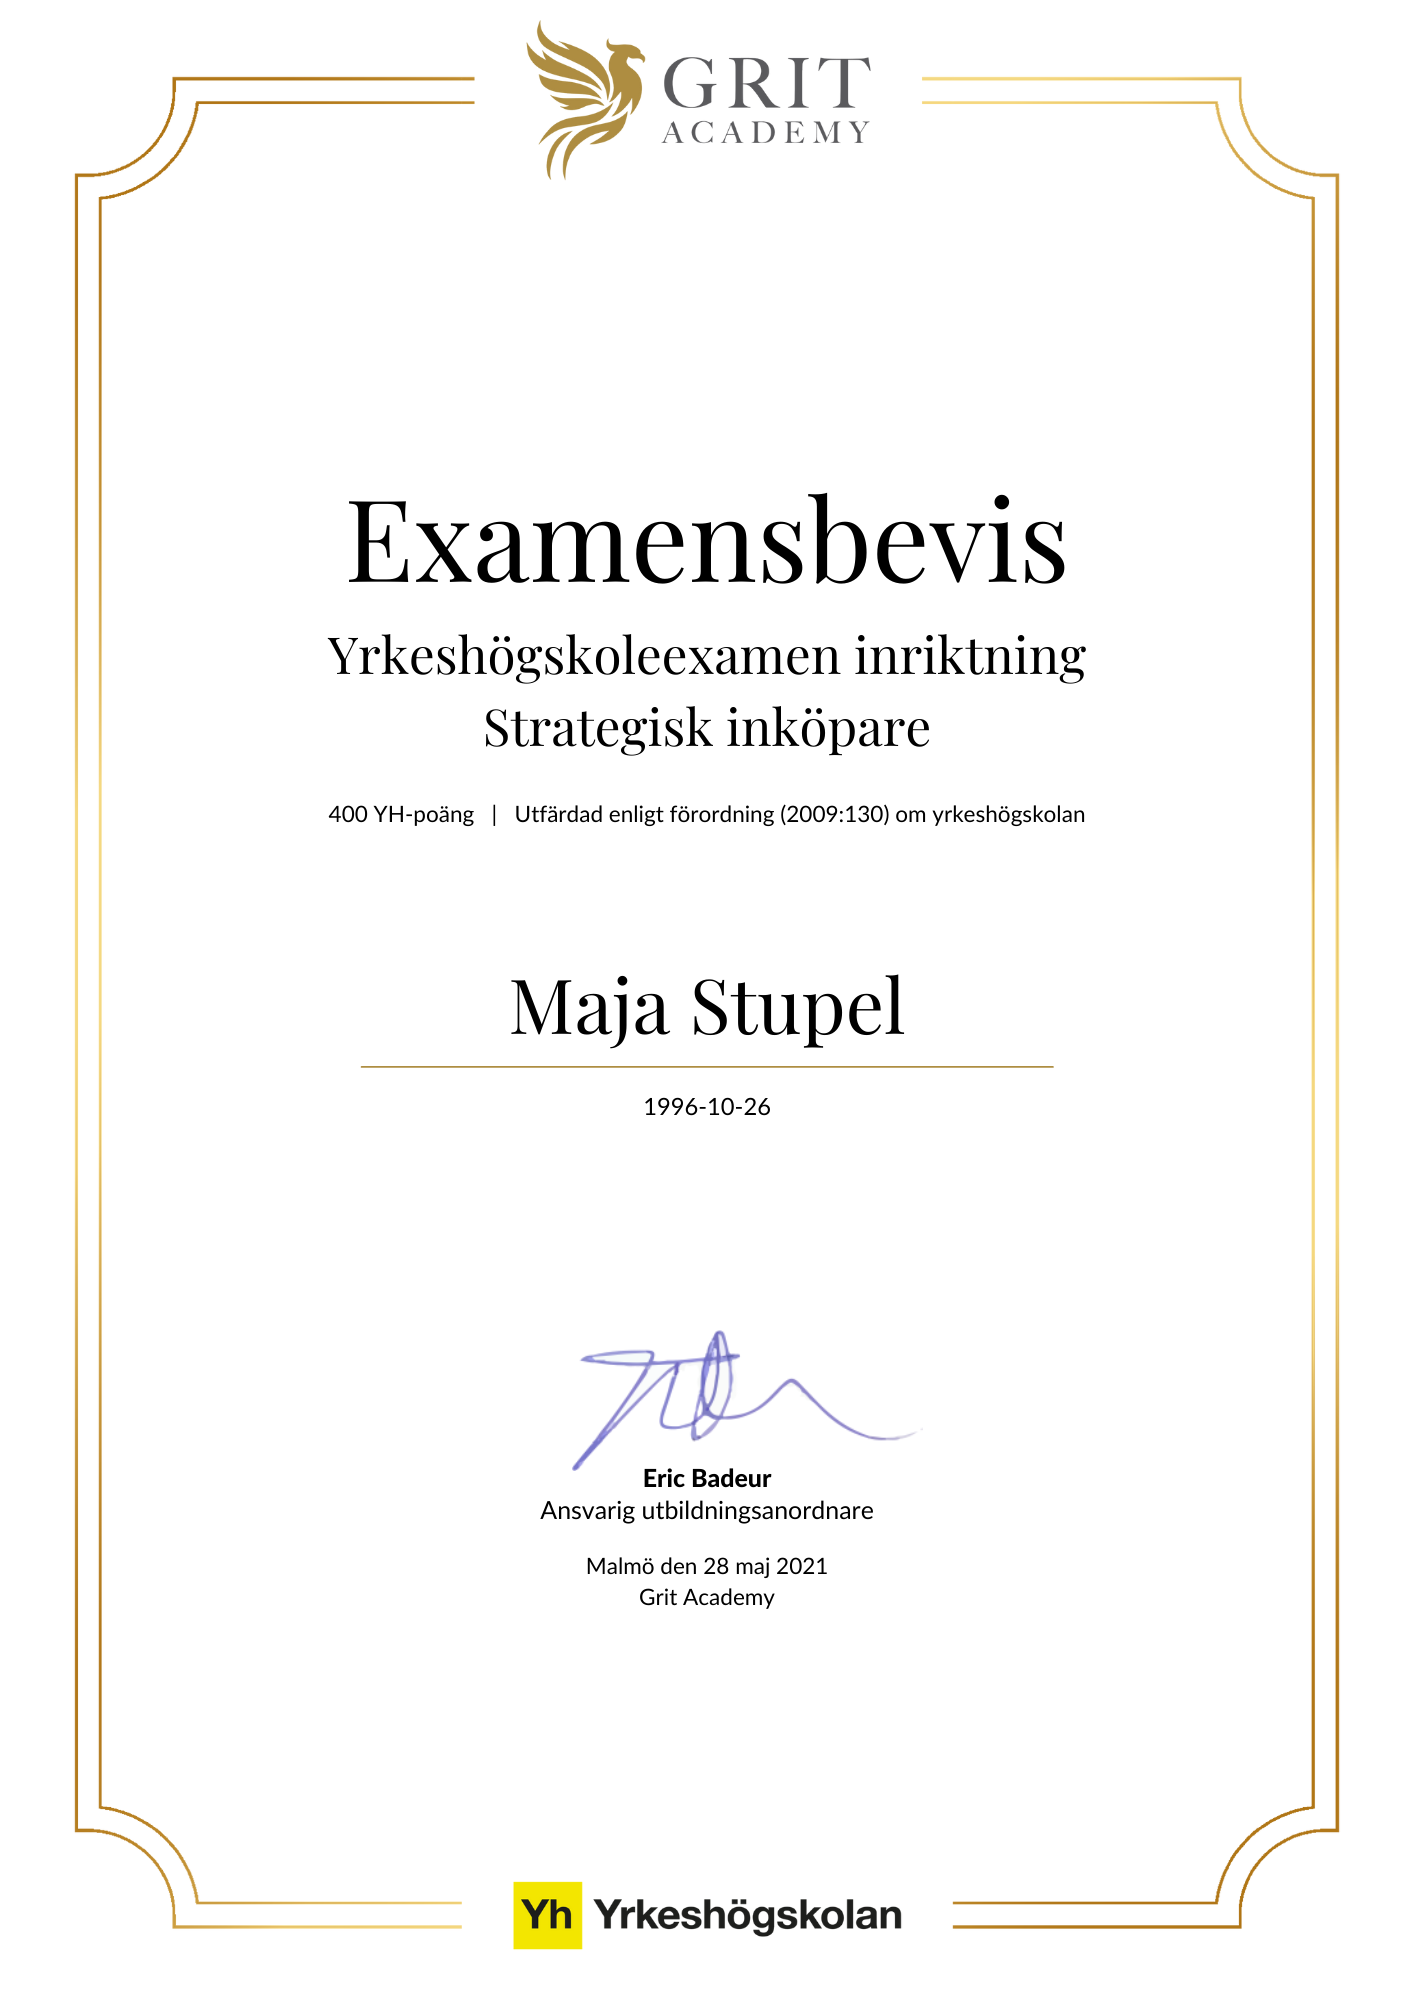 Examensbevis Maja Stupel - 1